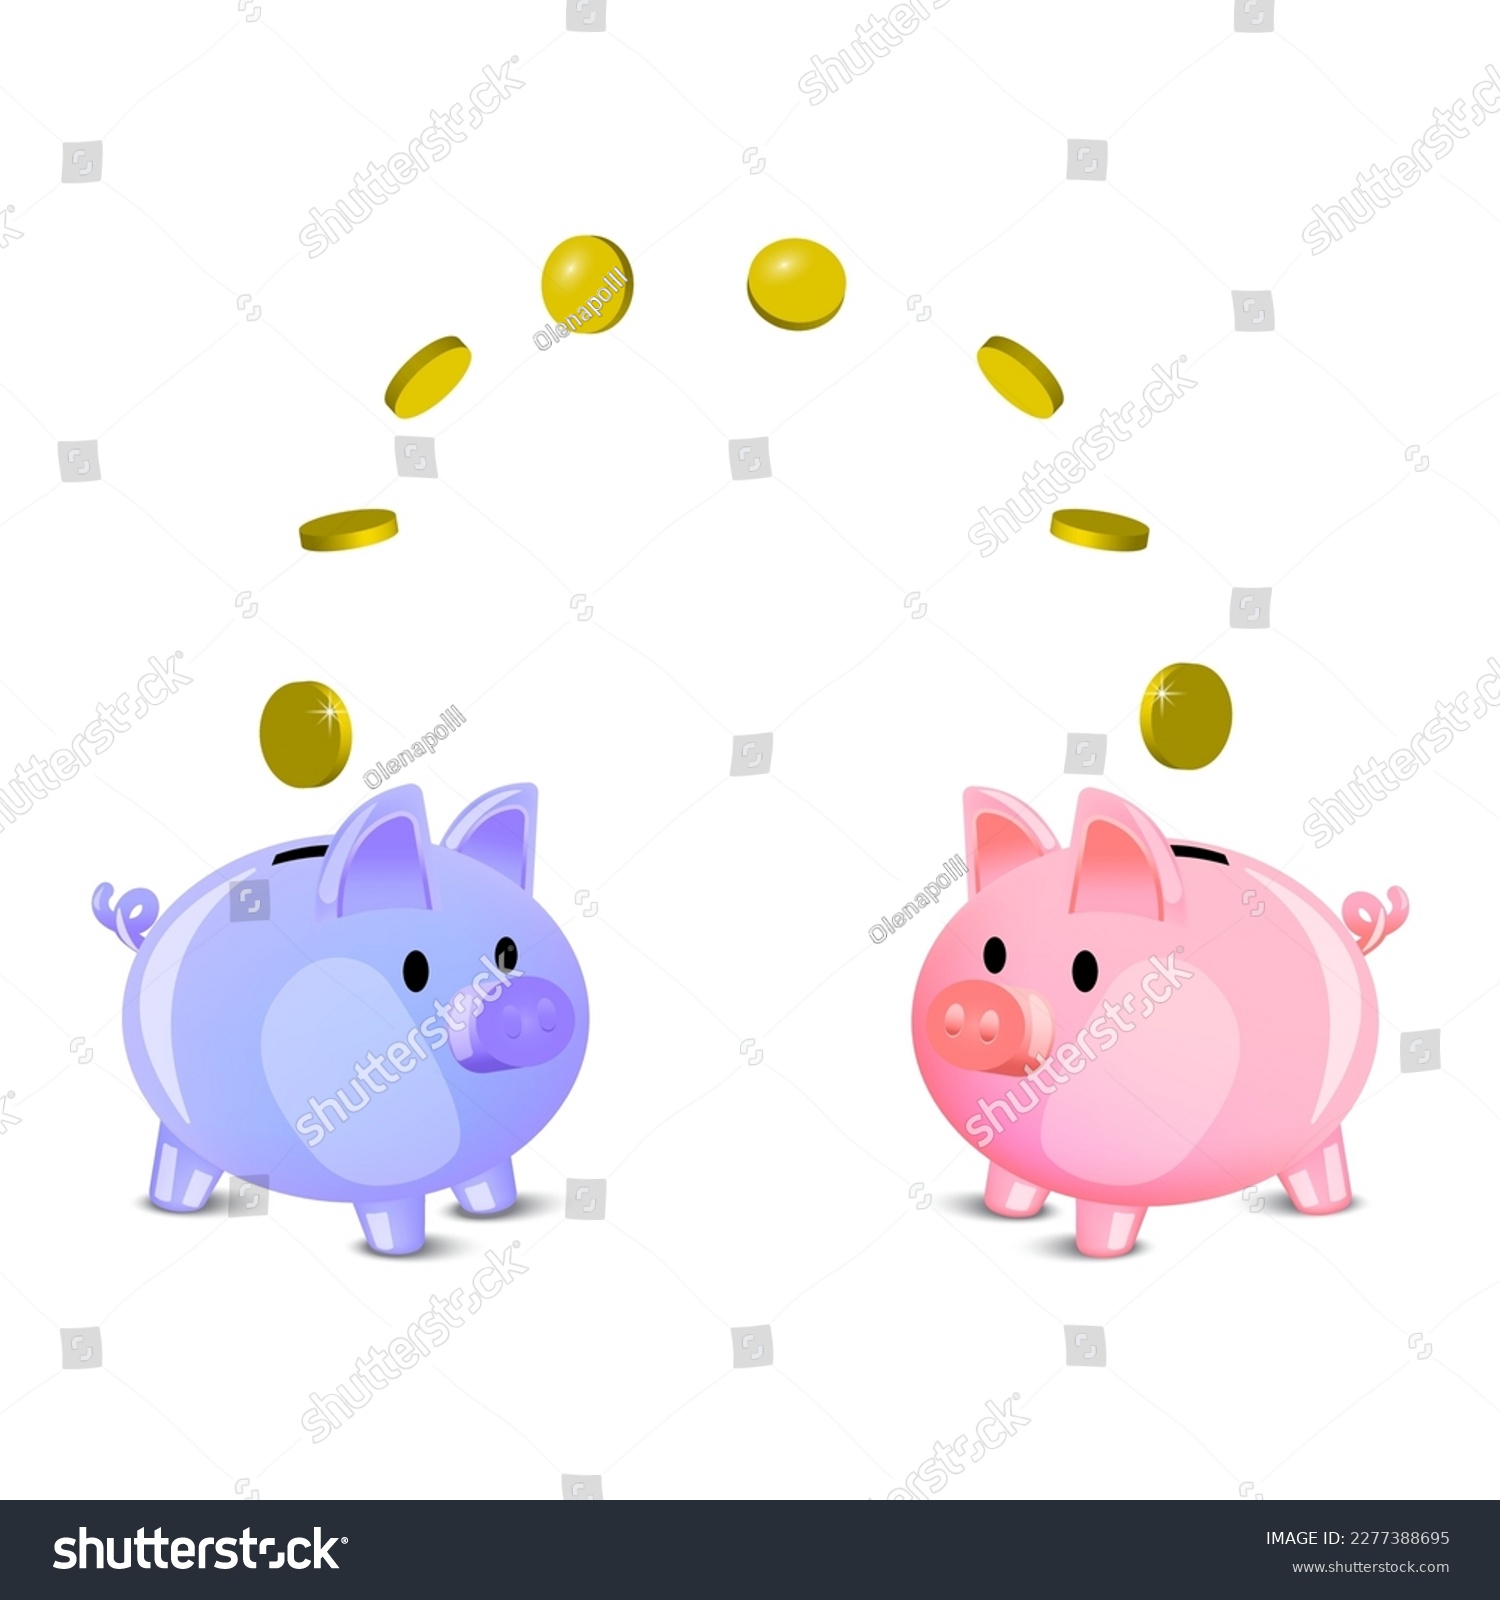 SVG of Cartoon two piggy banks pig. Money saving concept. Business concept. Vector illustration. svg